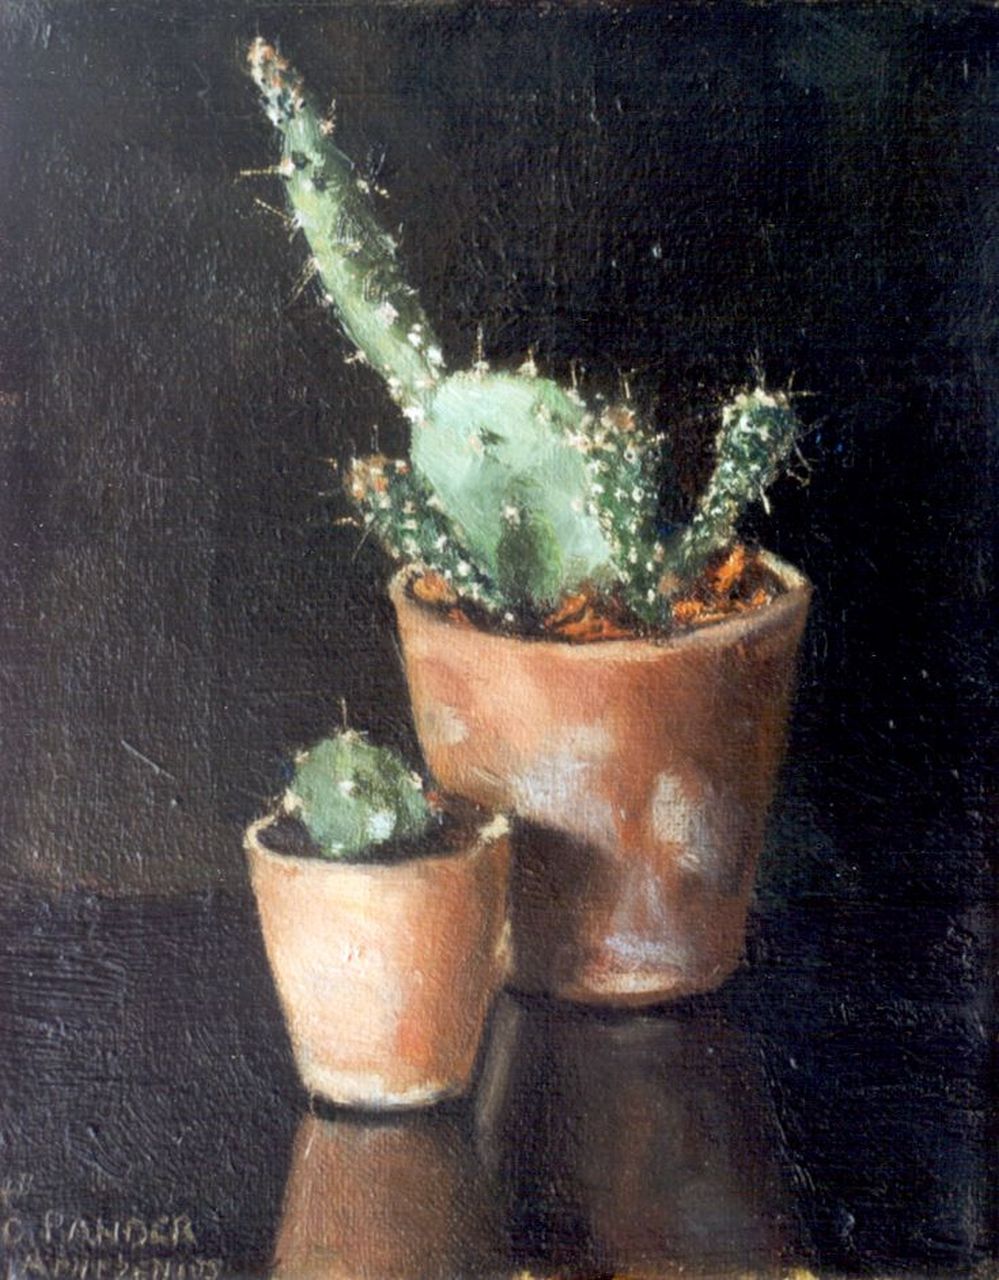 Arntzenius E.C.  | Elise Claudine Arntzenius, Cactusplantjes, olieverf op doek 21,2 x 17,0 cm, gesigneerd linksonder